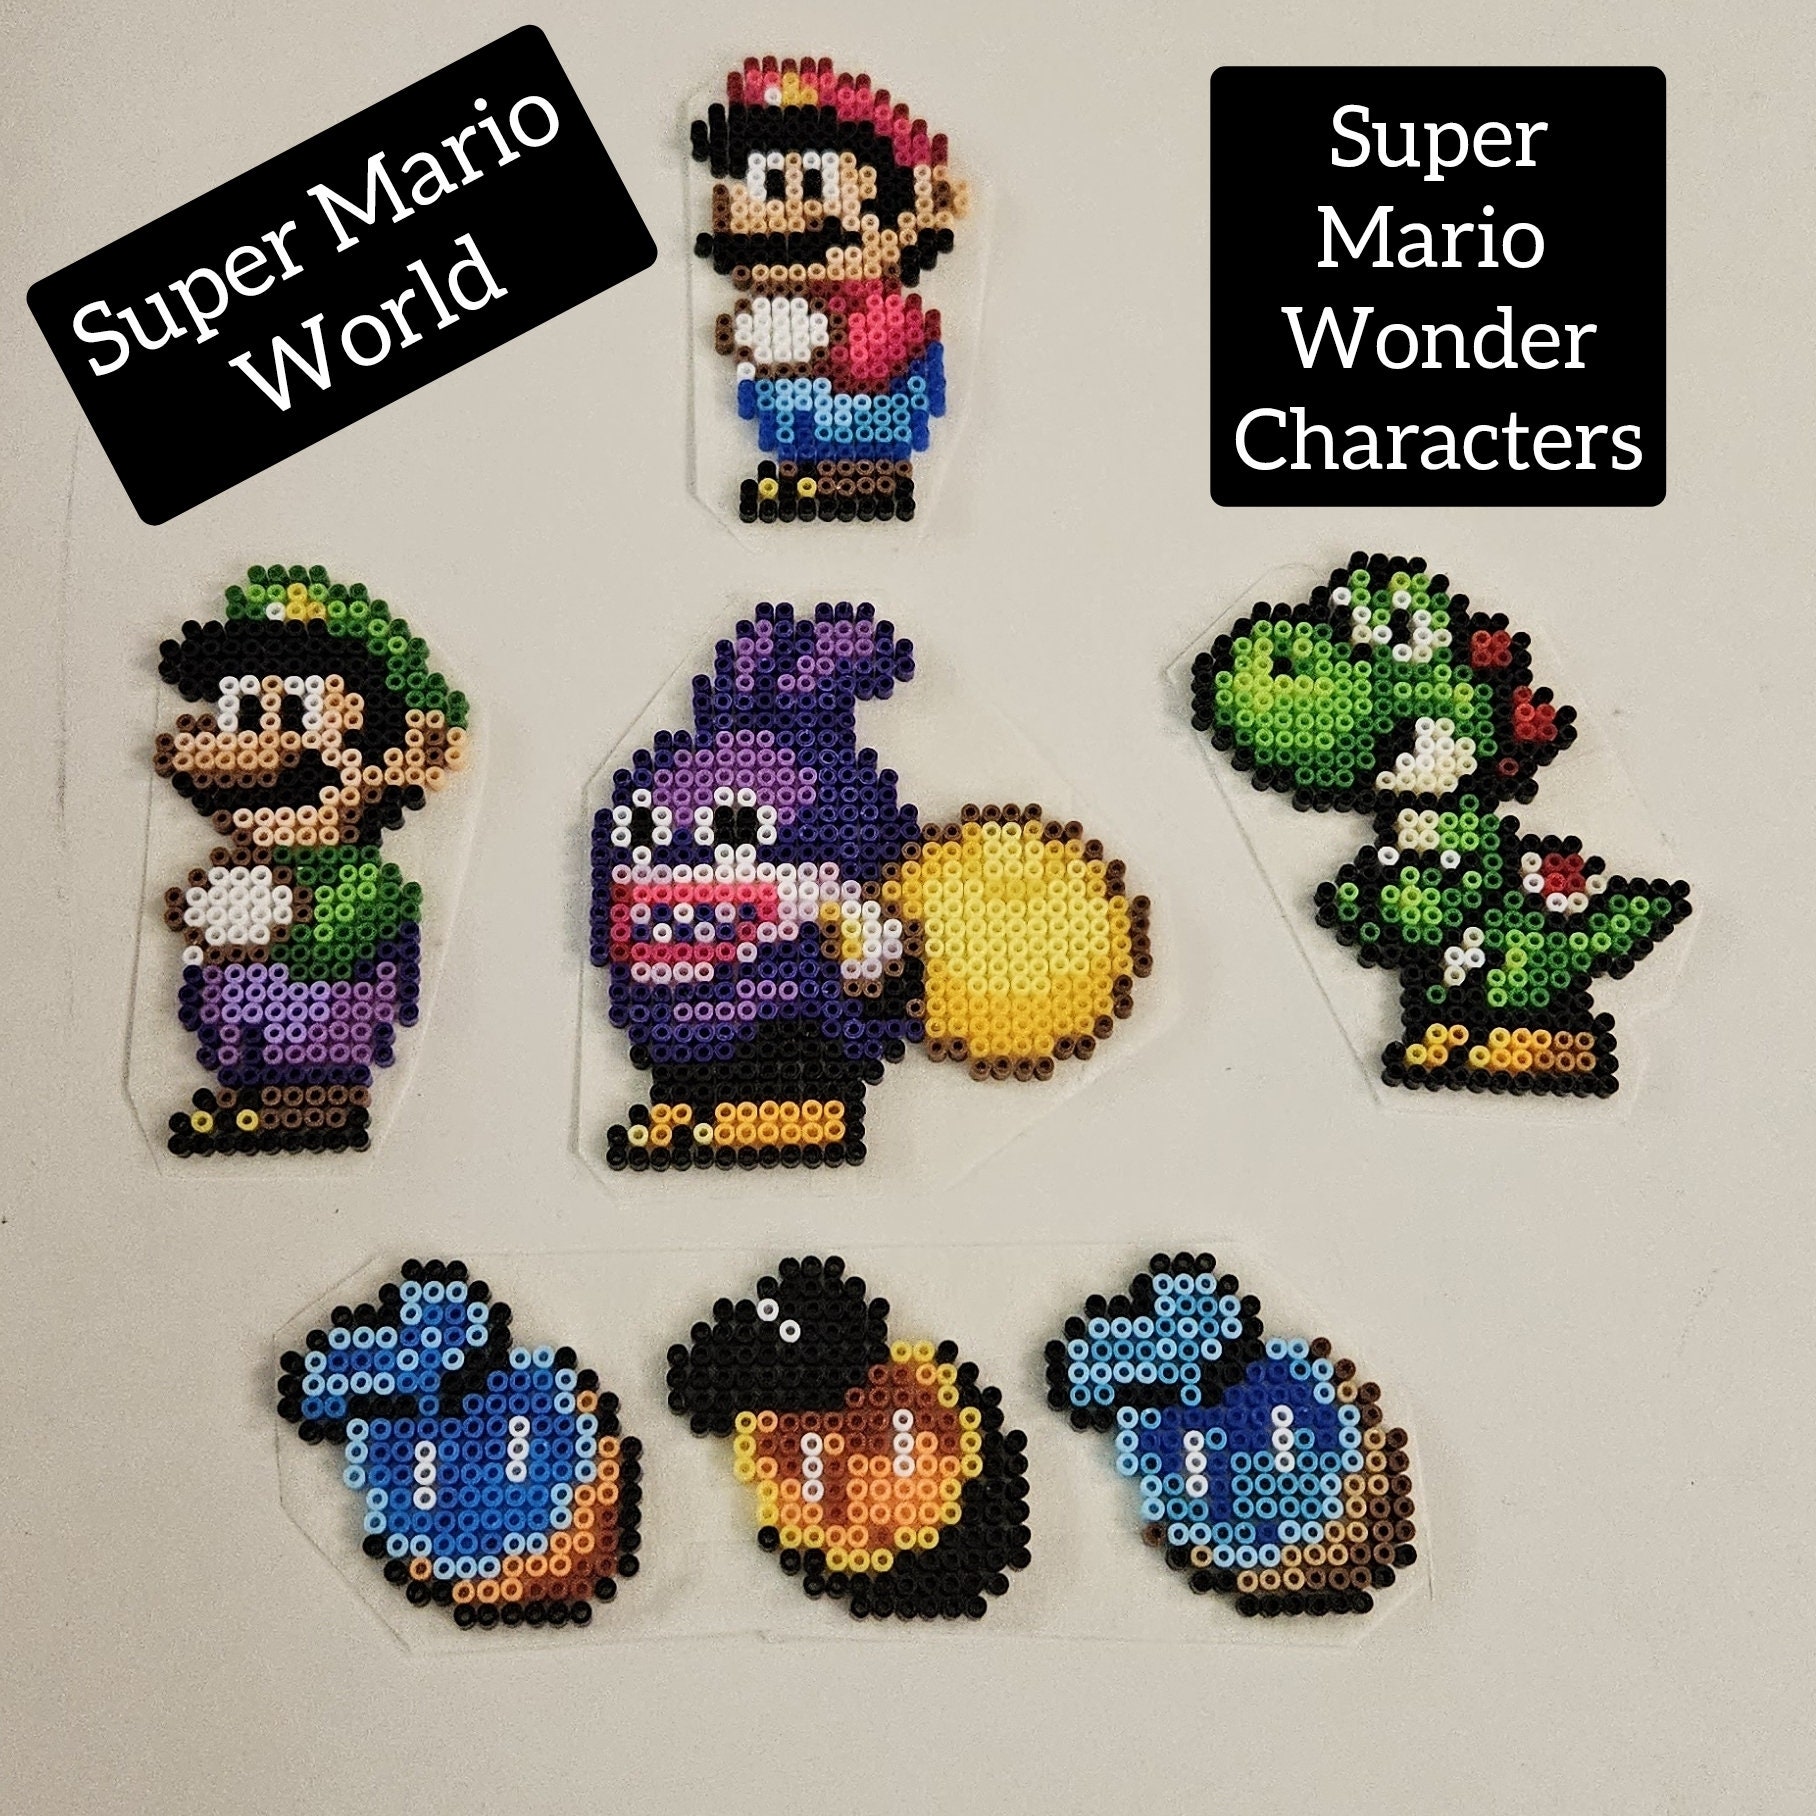 Super Mario World Mini Bead Sprites incl. Wonder Characters Mario